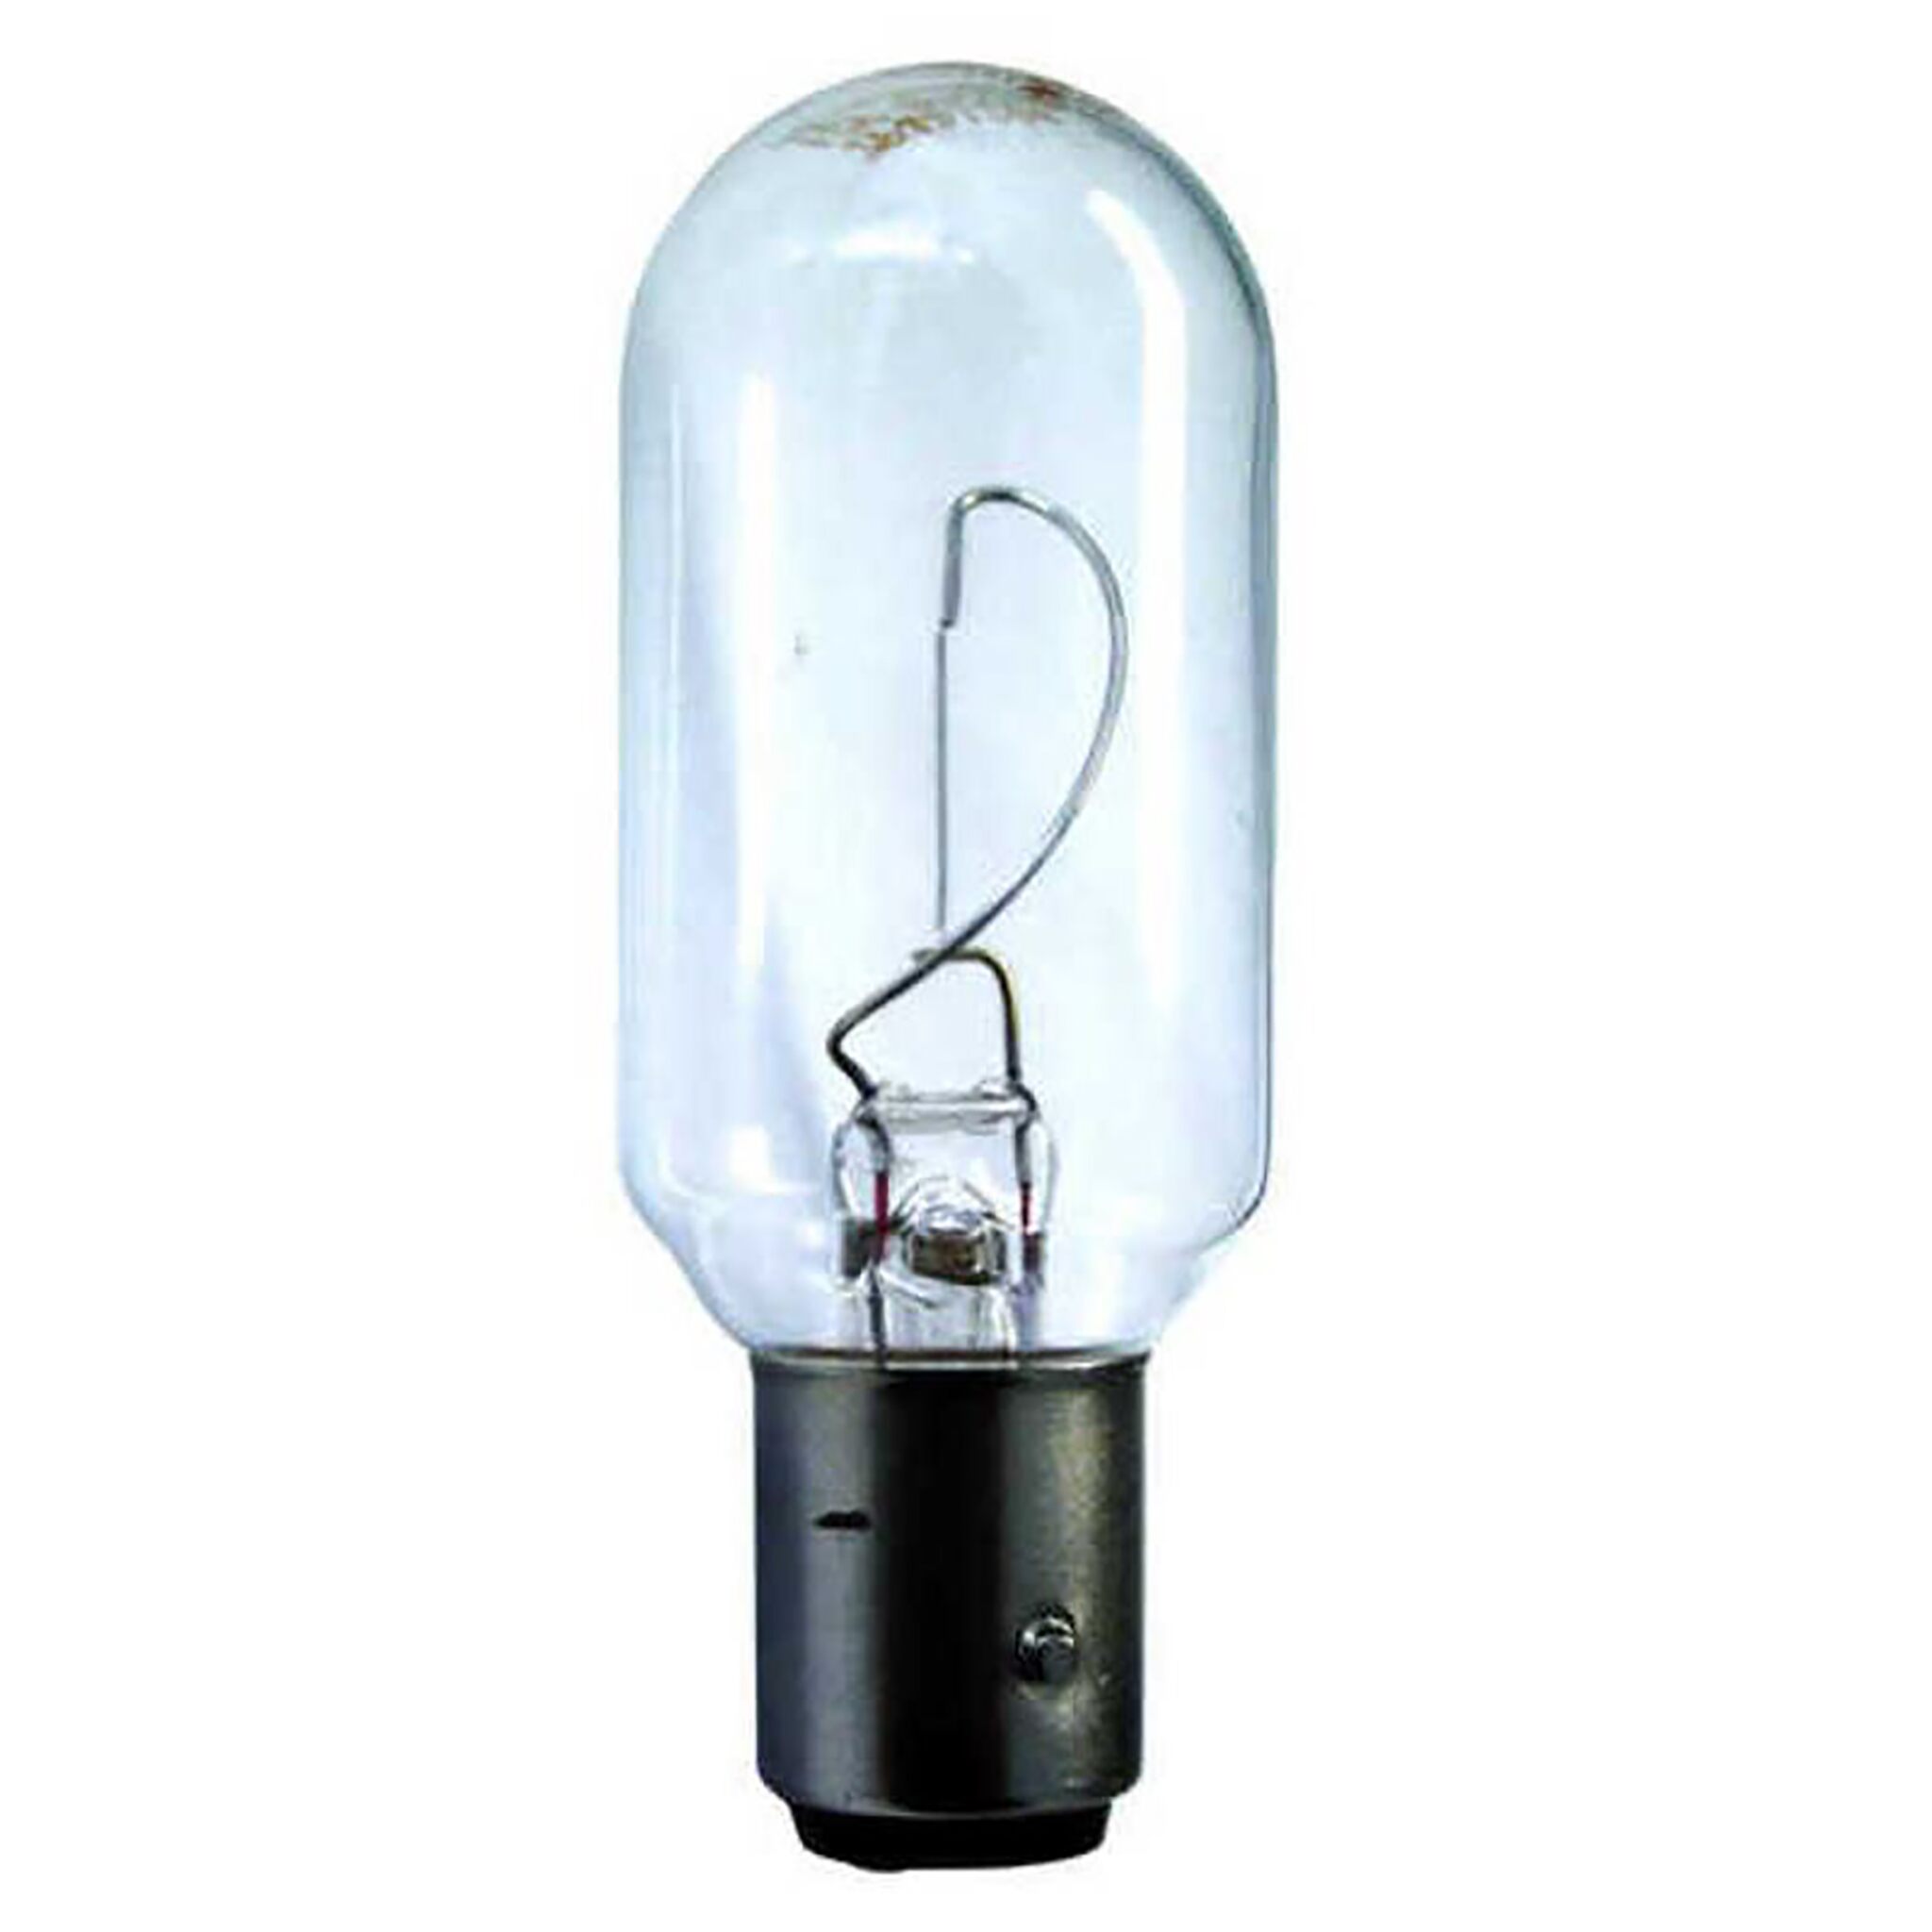 HELLA bulb for position lights